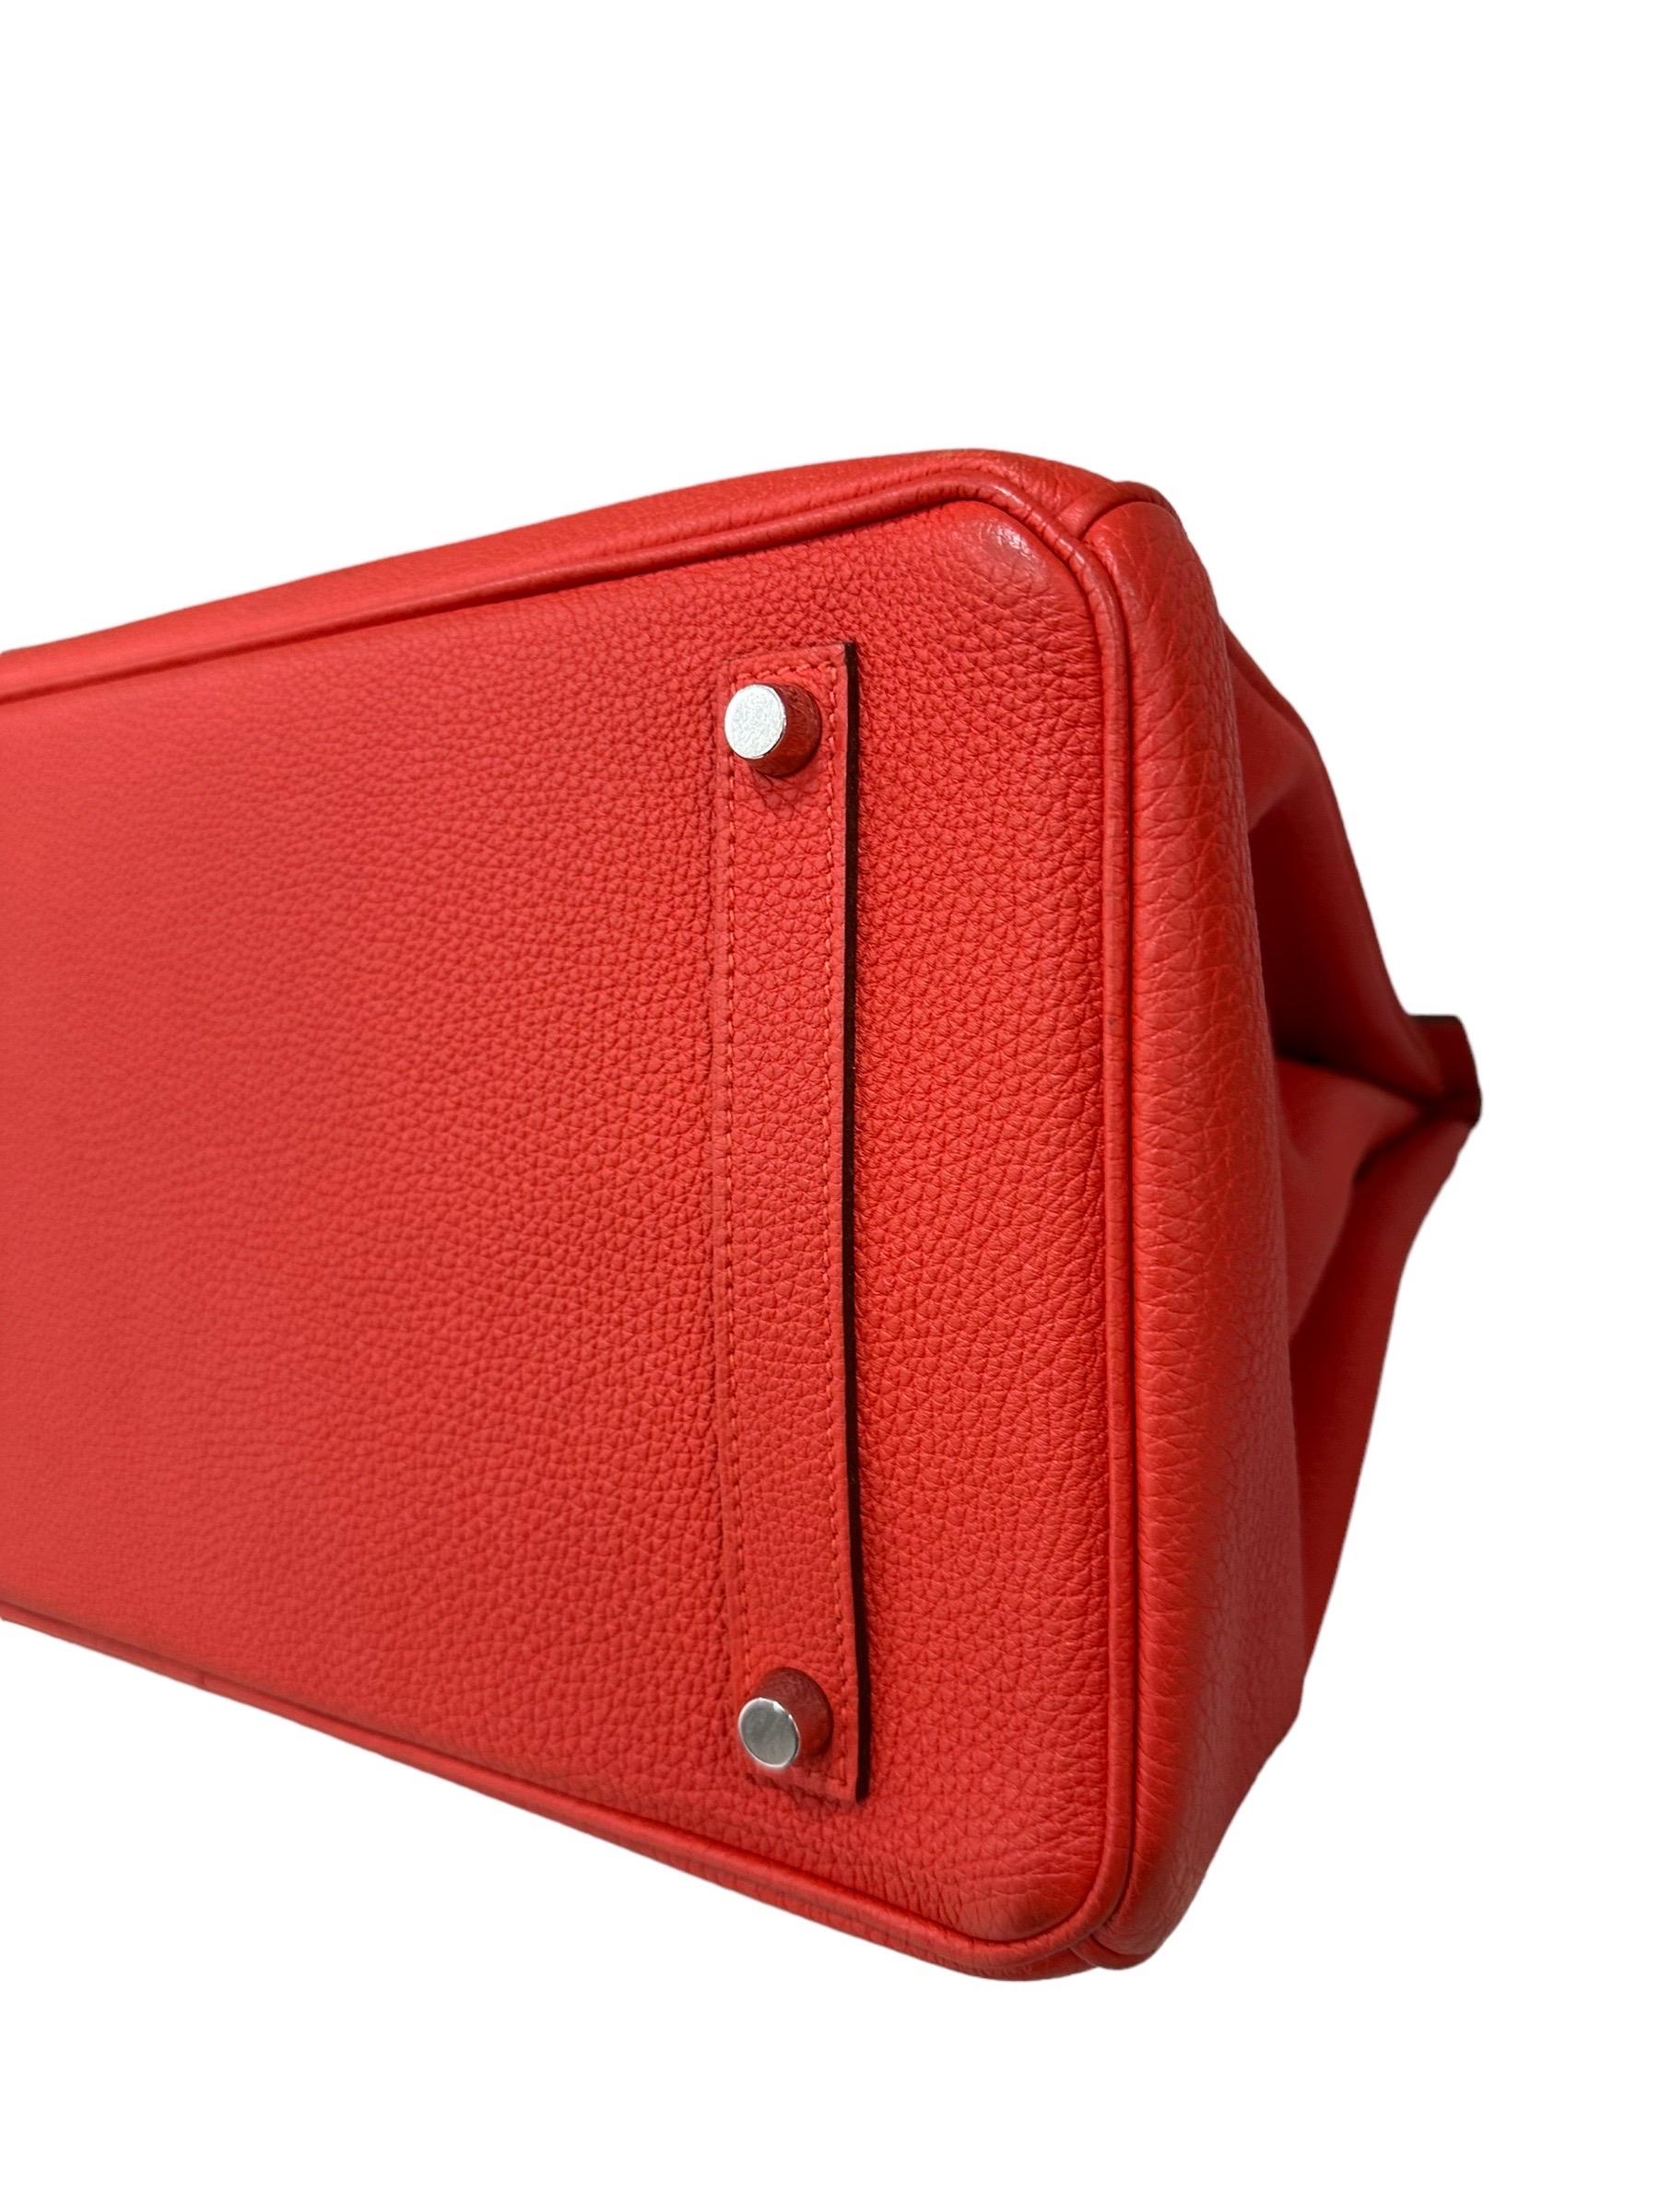 2011 Hermès Birkin 35 Togo Leather Rouge Capucine Top Handle Bag For Sale 8